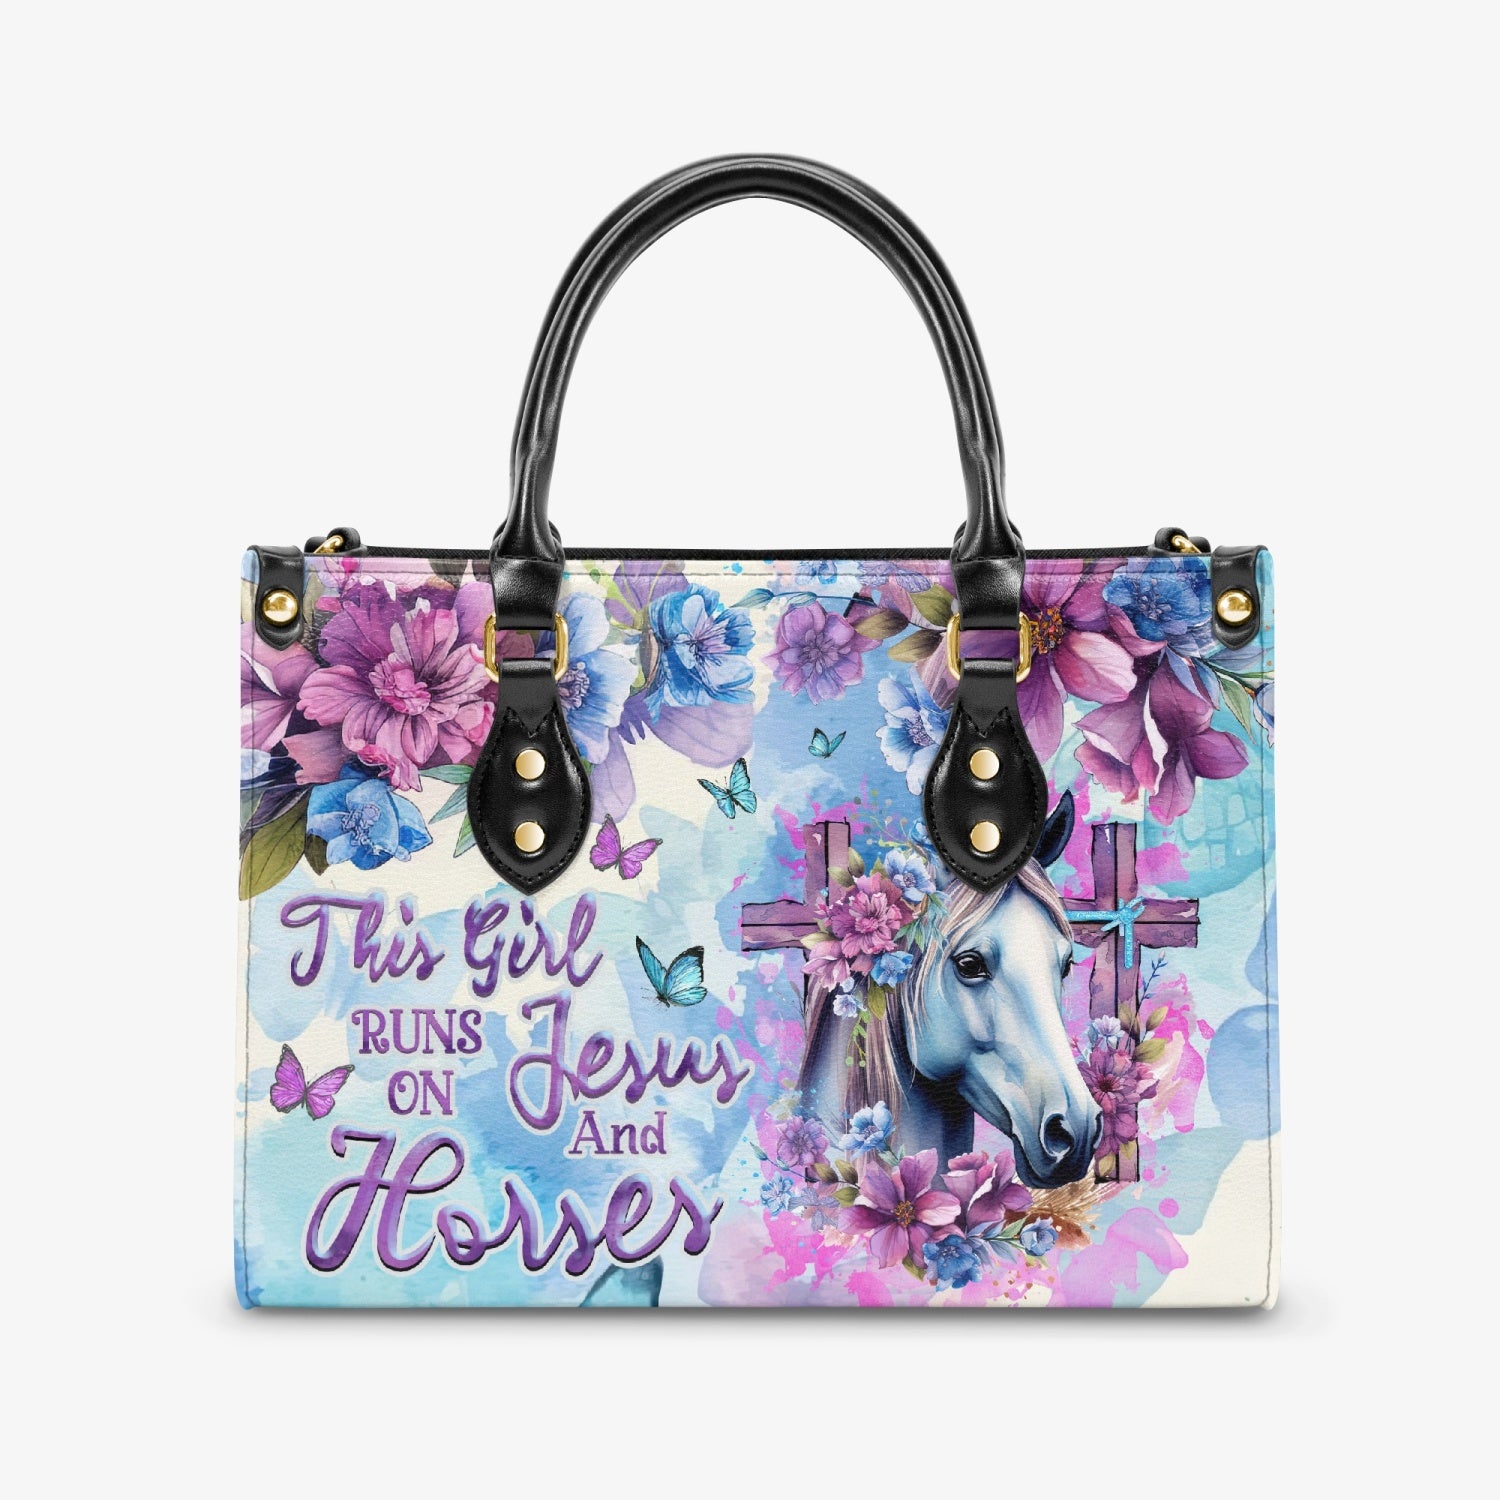 Runs On Jesus And Horses Leather Handbag - Tlnz0404242